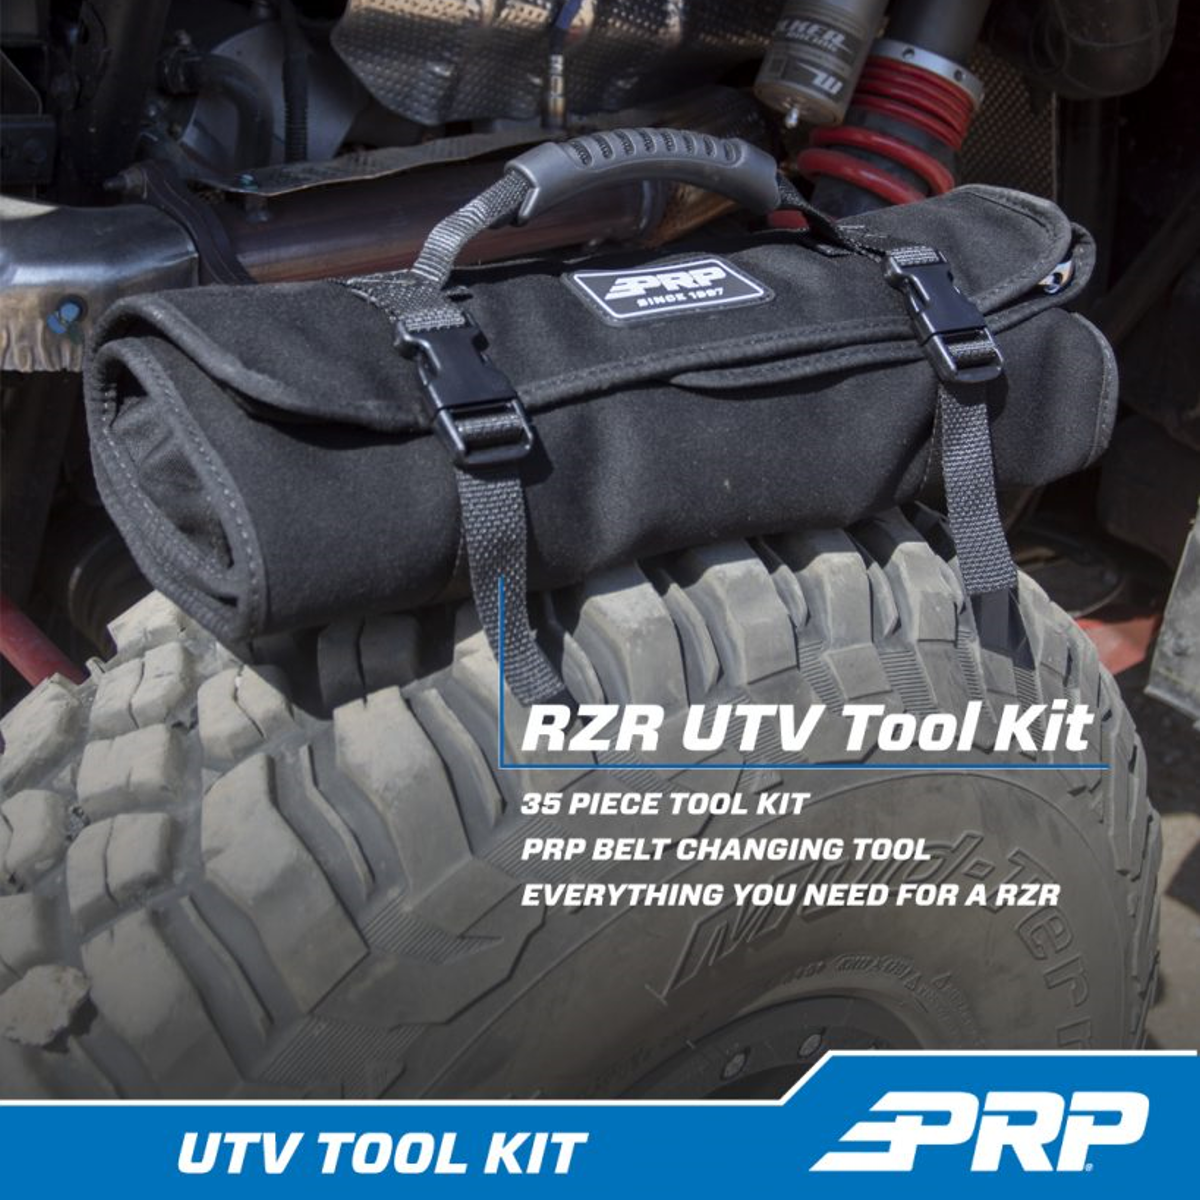 Polaris RZR Roll-Up Tool Kit and Spare Drive Belt Bag - BUNDLE